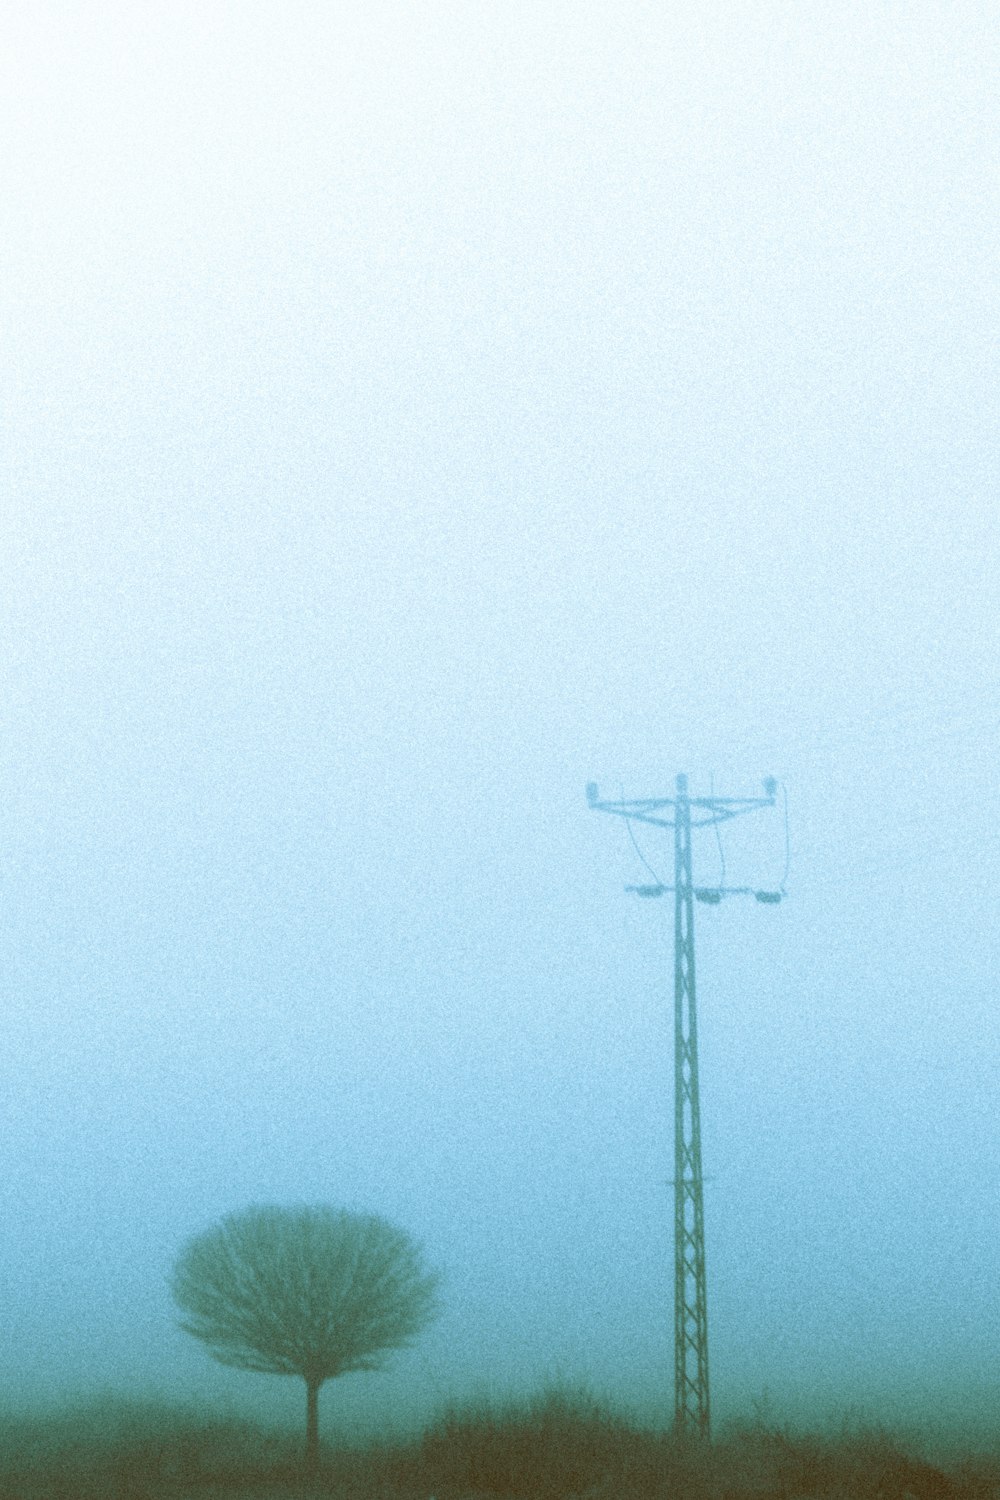 a foggy field with a telephone pole and a tree